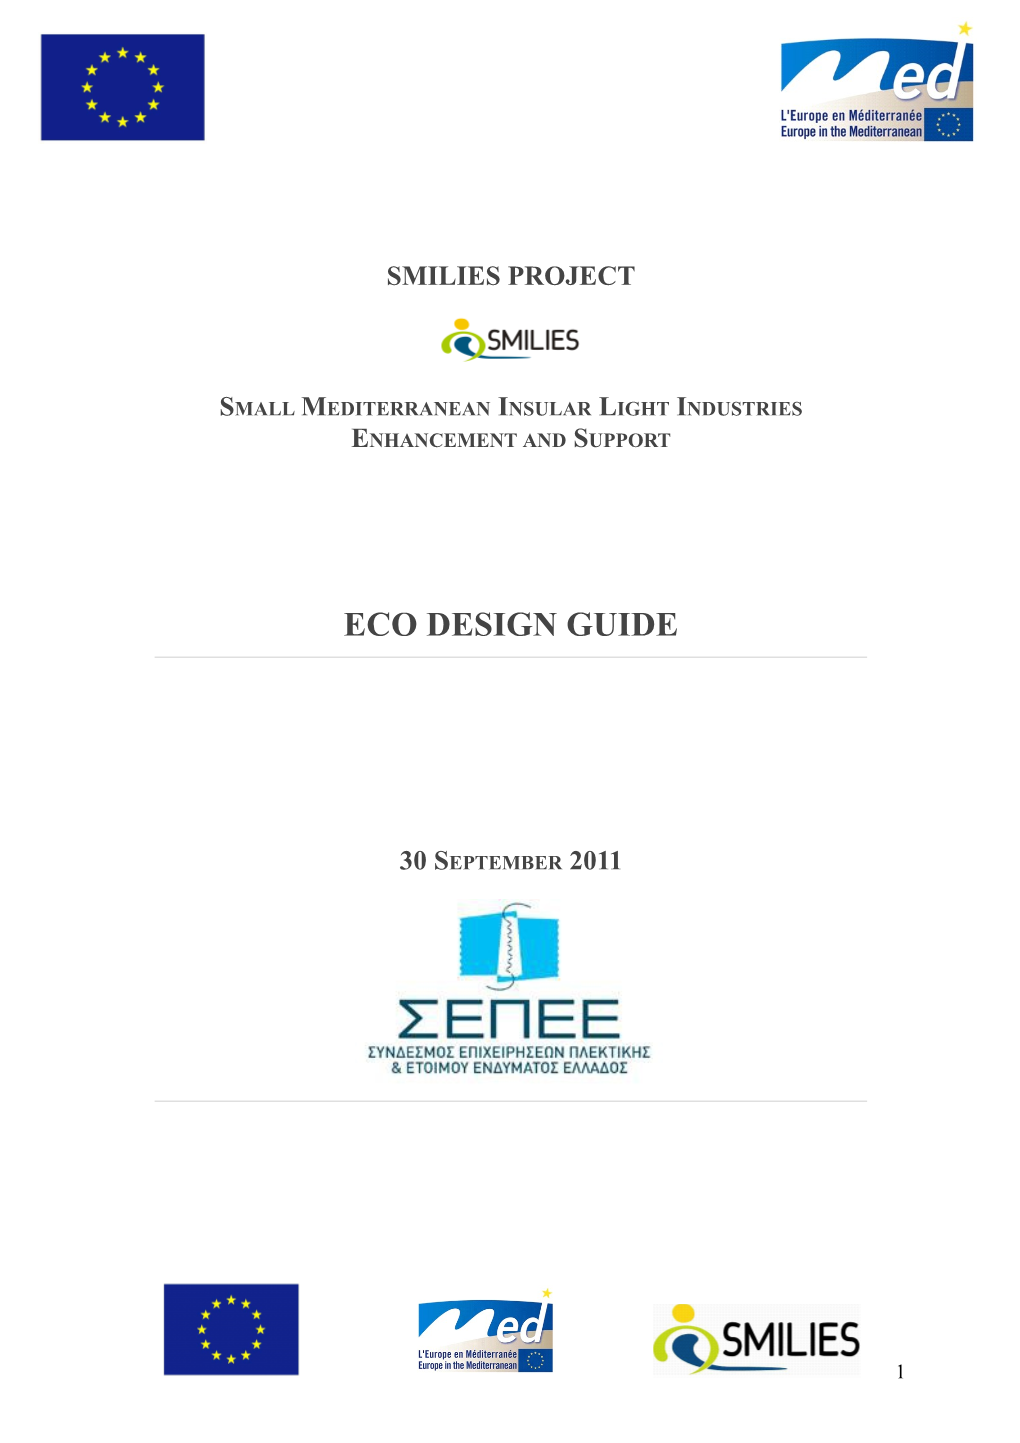 Small Mediterranean Insular Light Industries Enhancement and Support